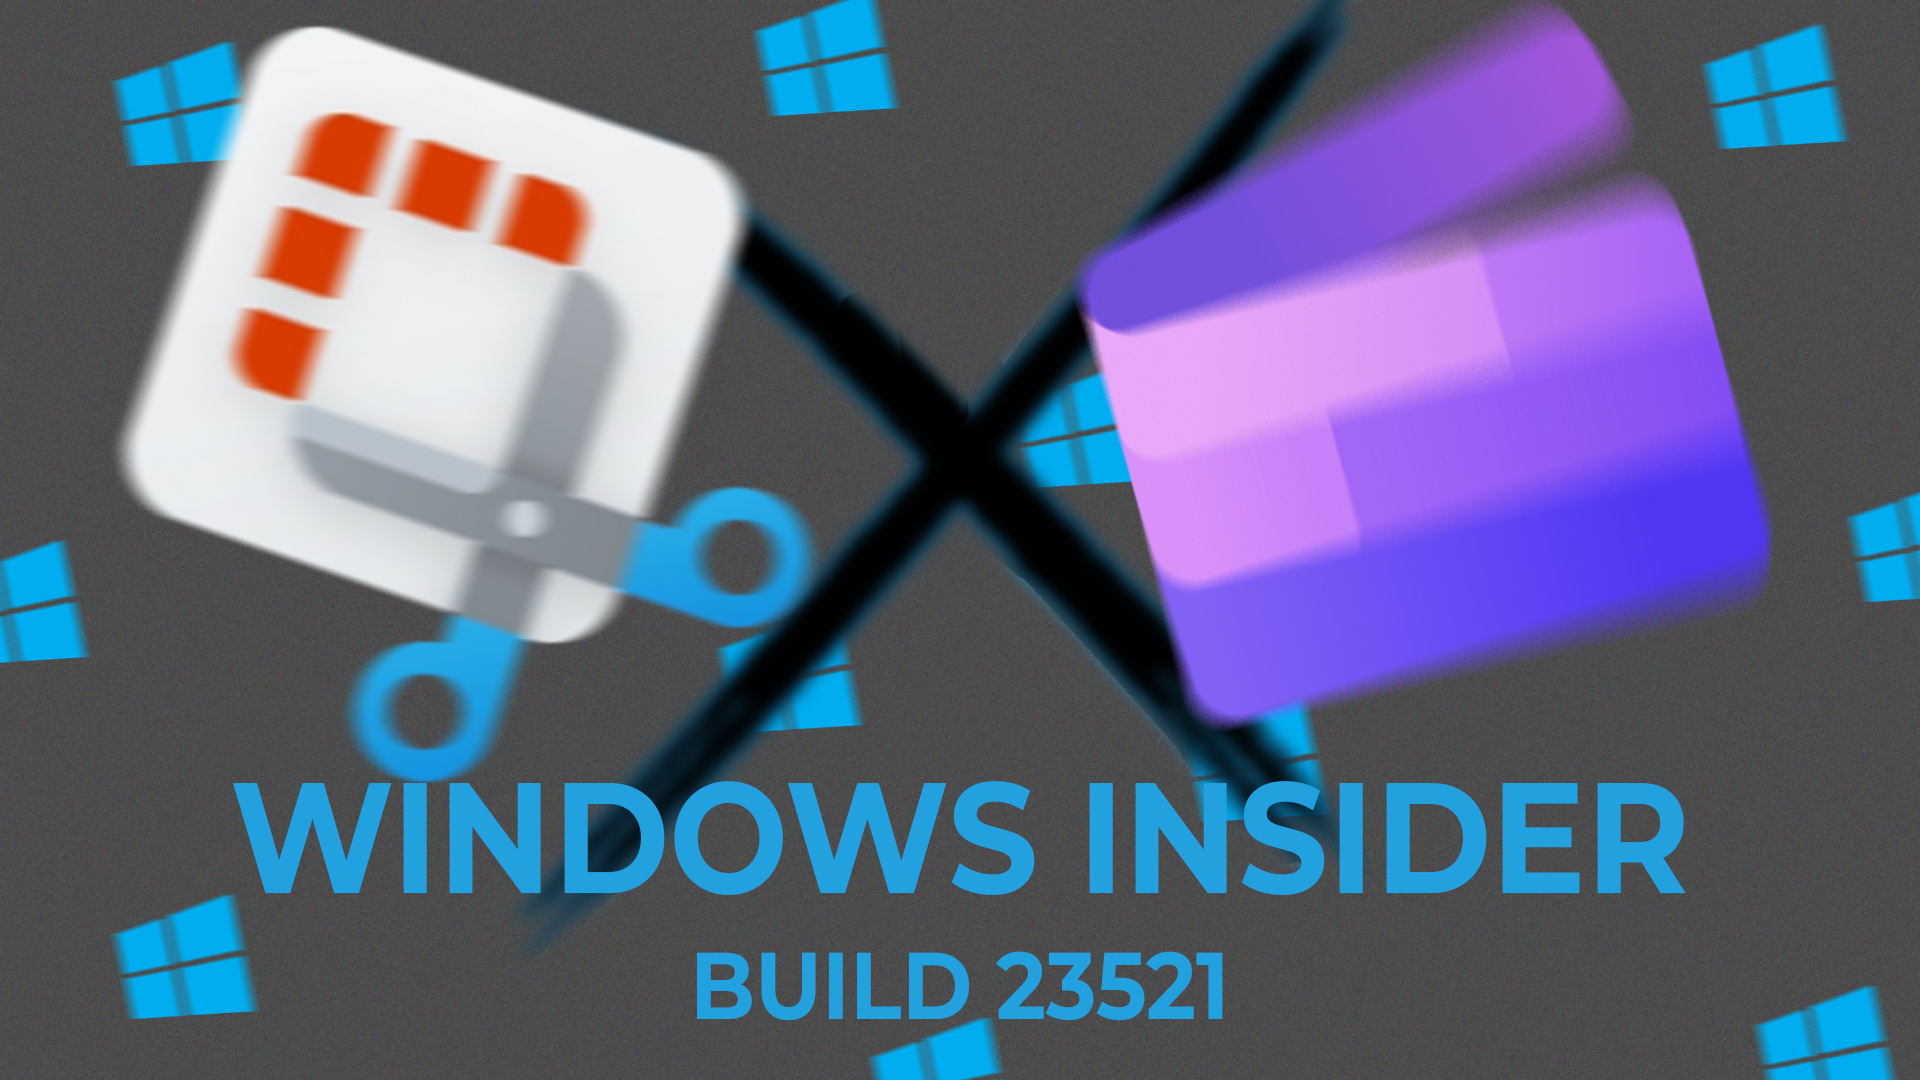 Windows Insider Build 23521